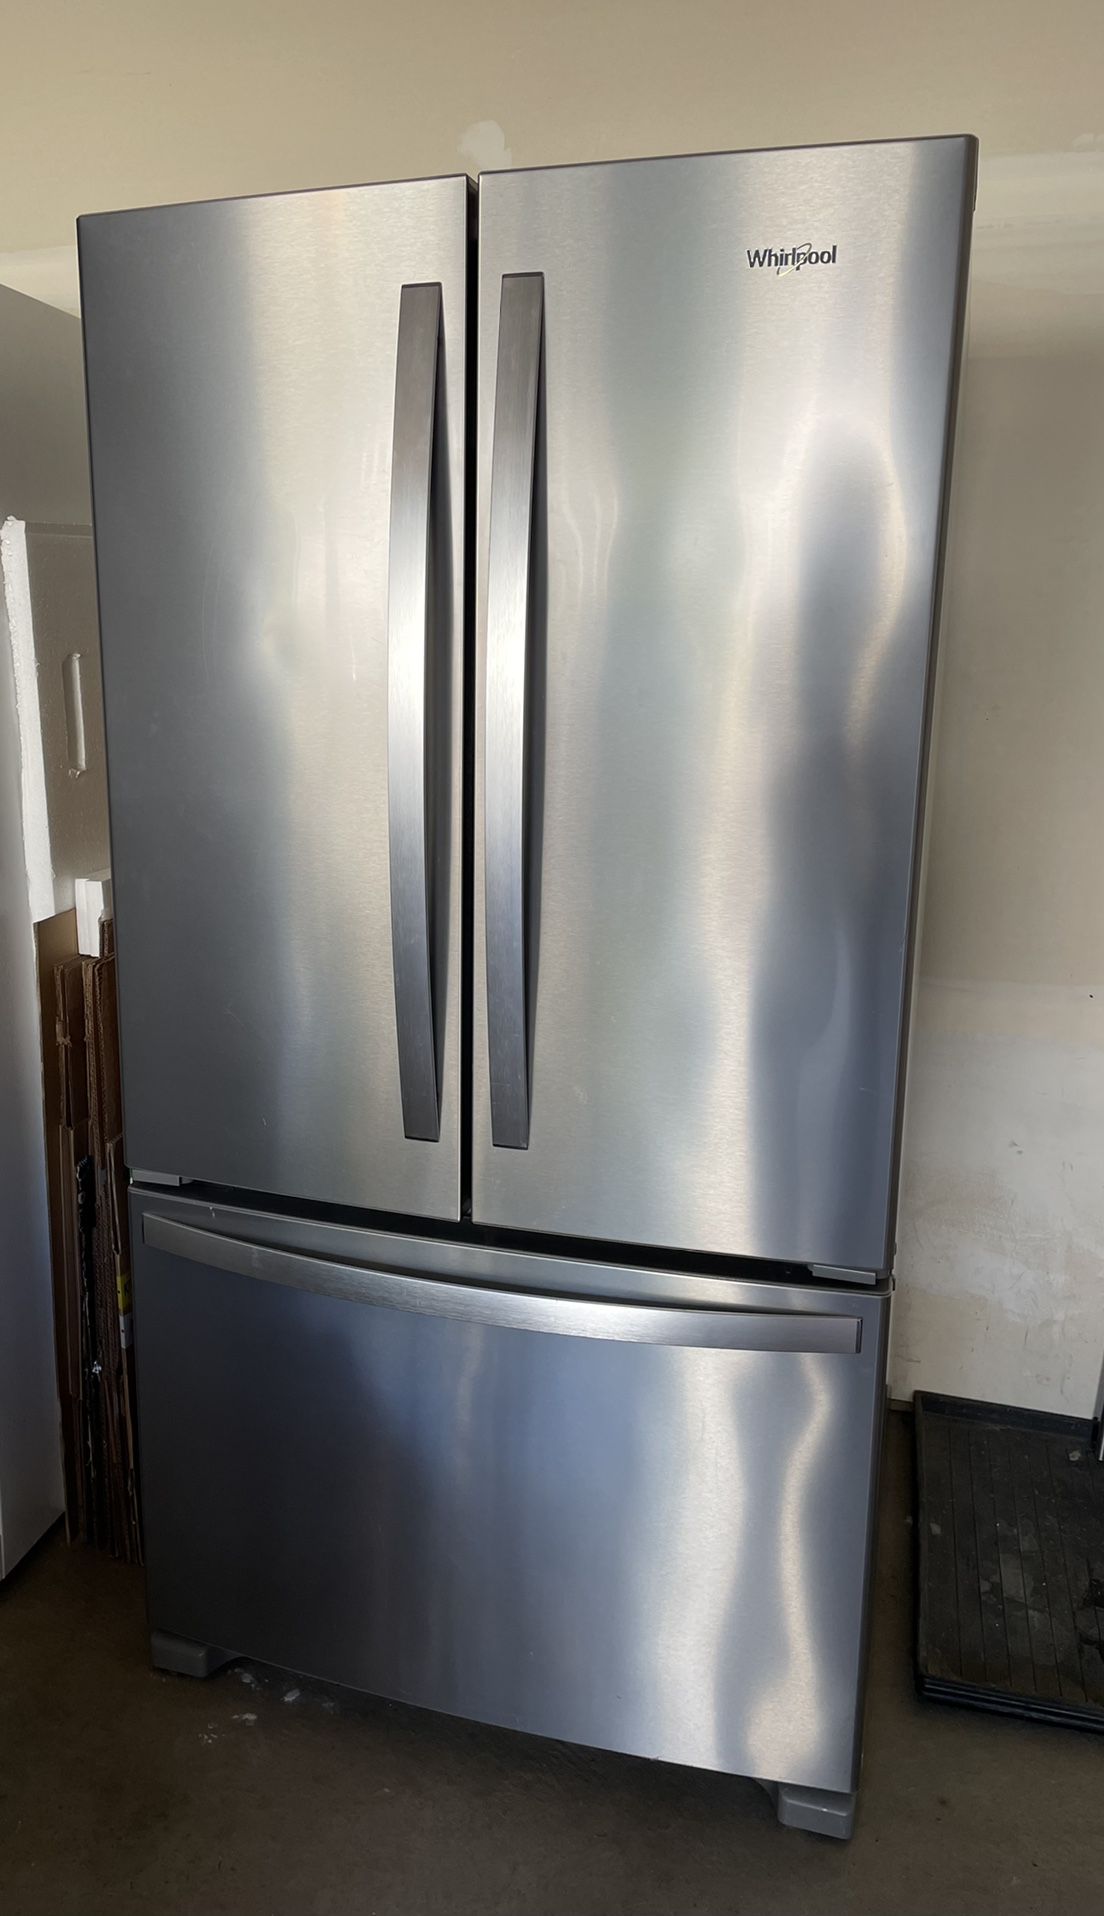 Whirlpool Refrigerator 25 cu.ft — French Doors/Ice-Maker/Filtered Water Dispenser under warranty